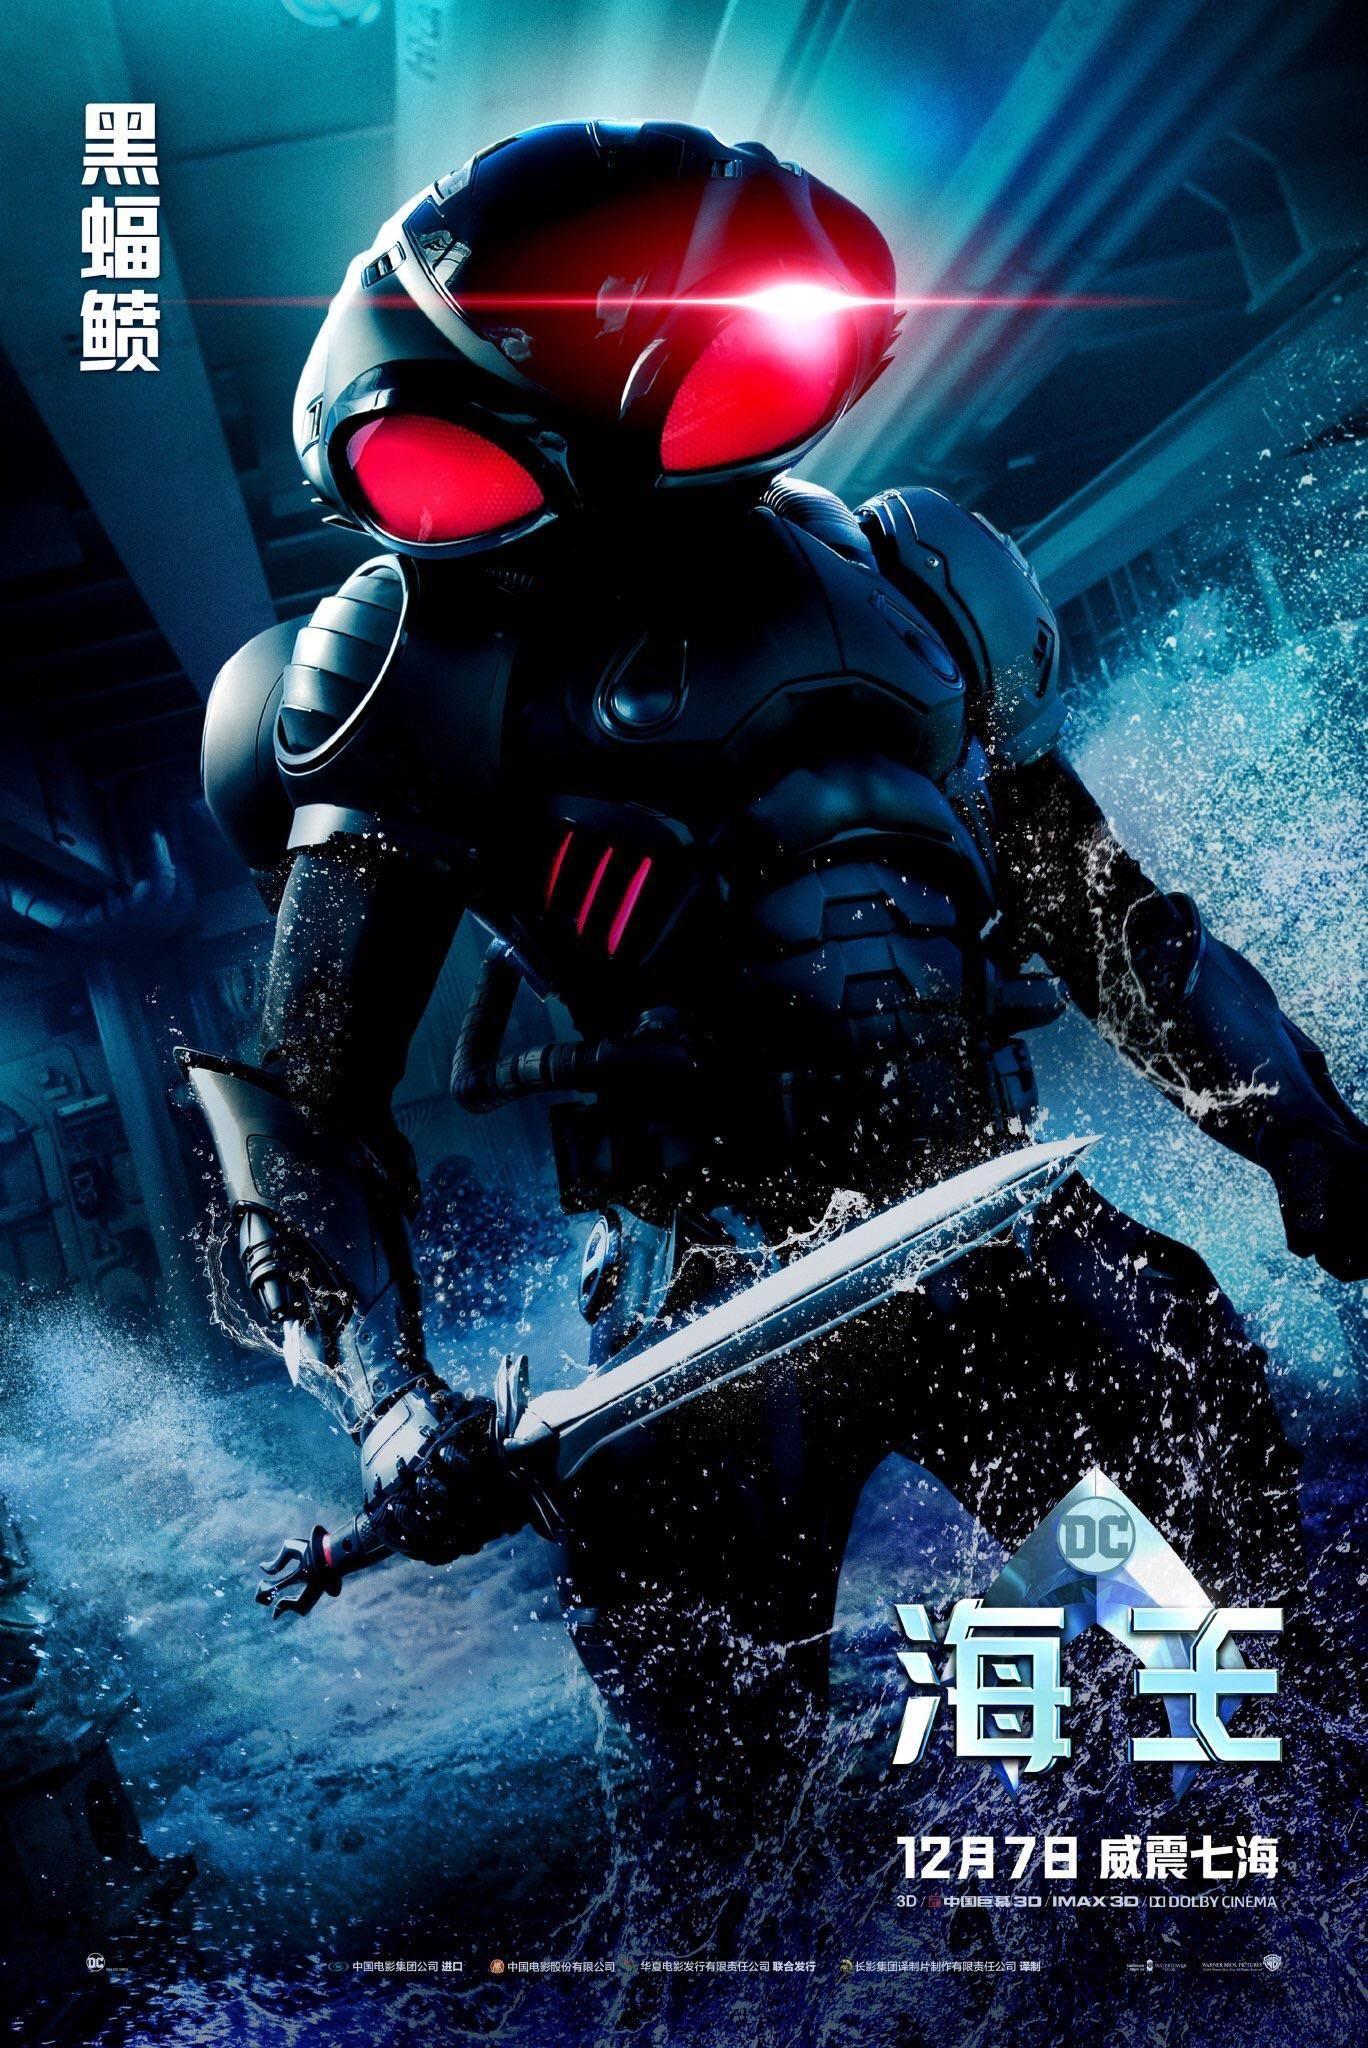 Aquaman' International Poster featuring Black Manta. Aquaman film